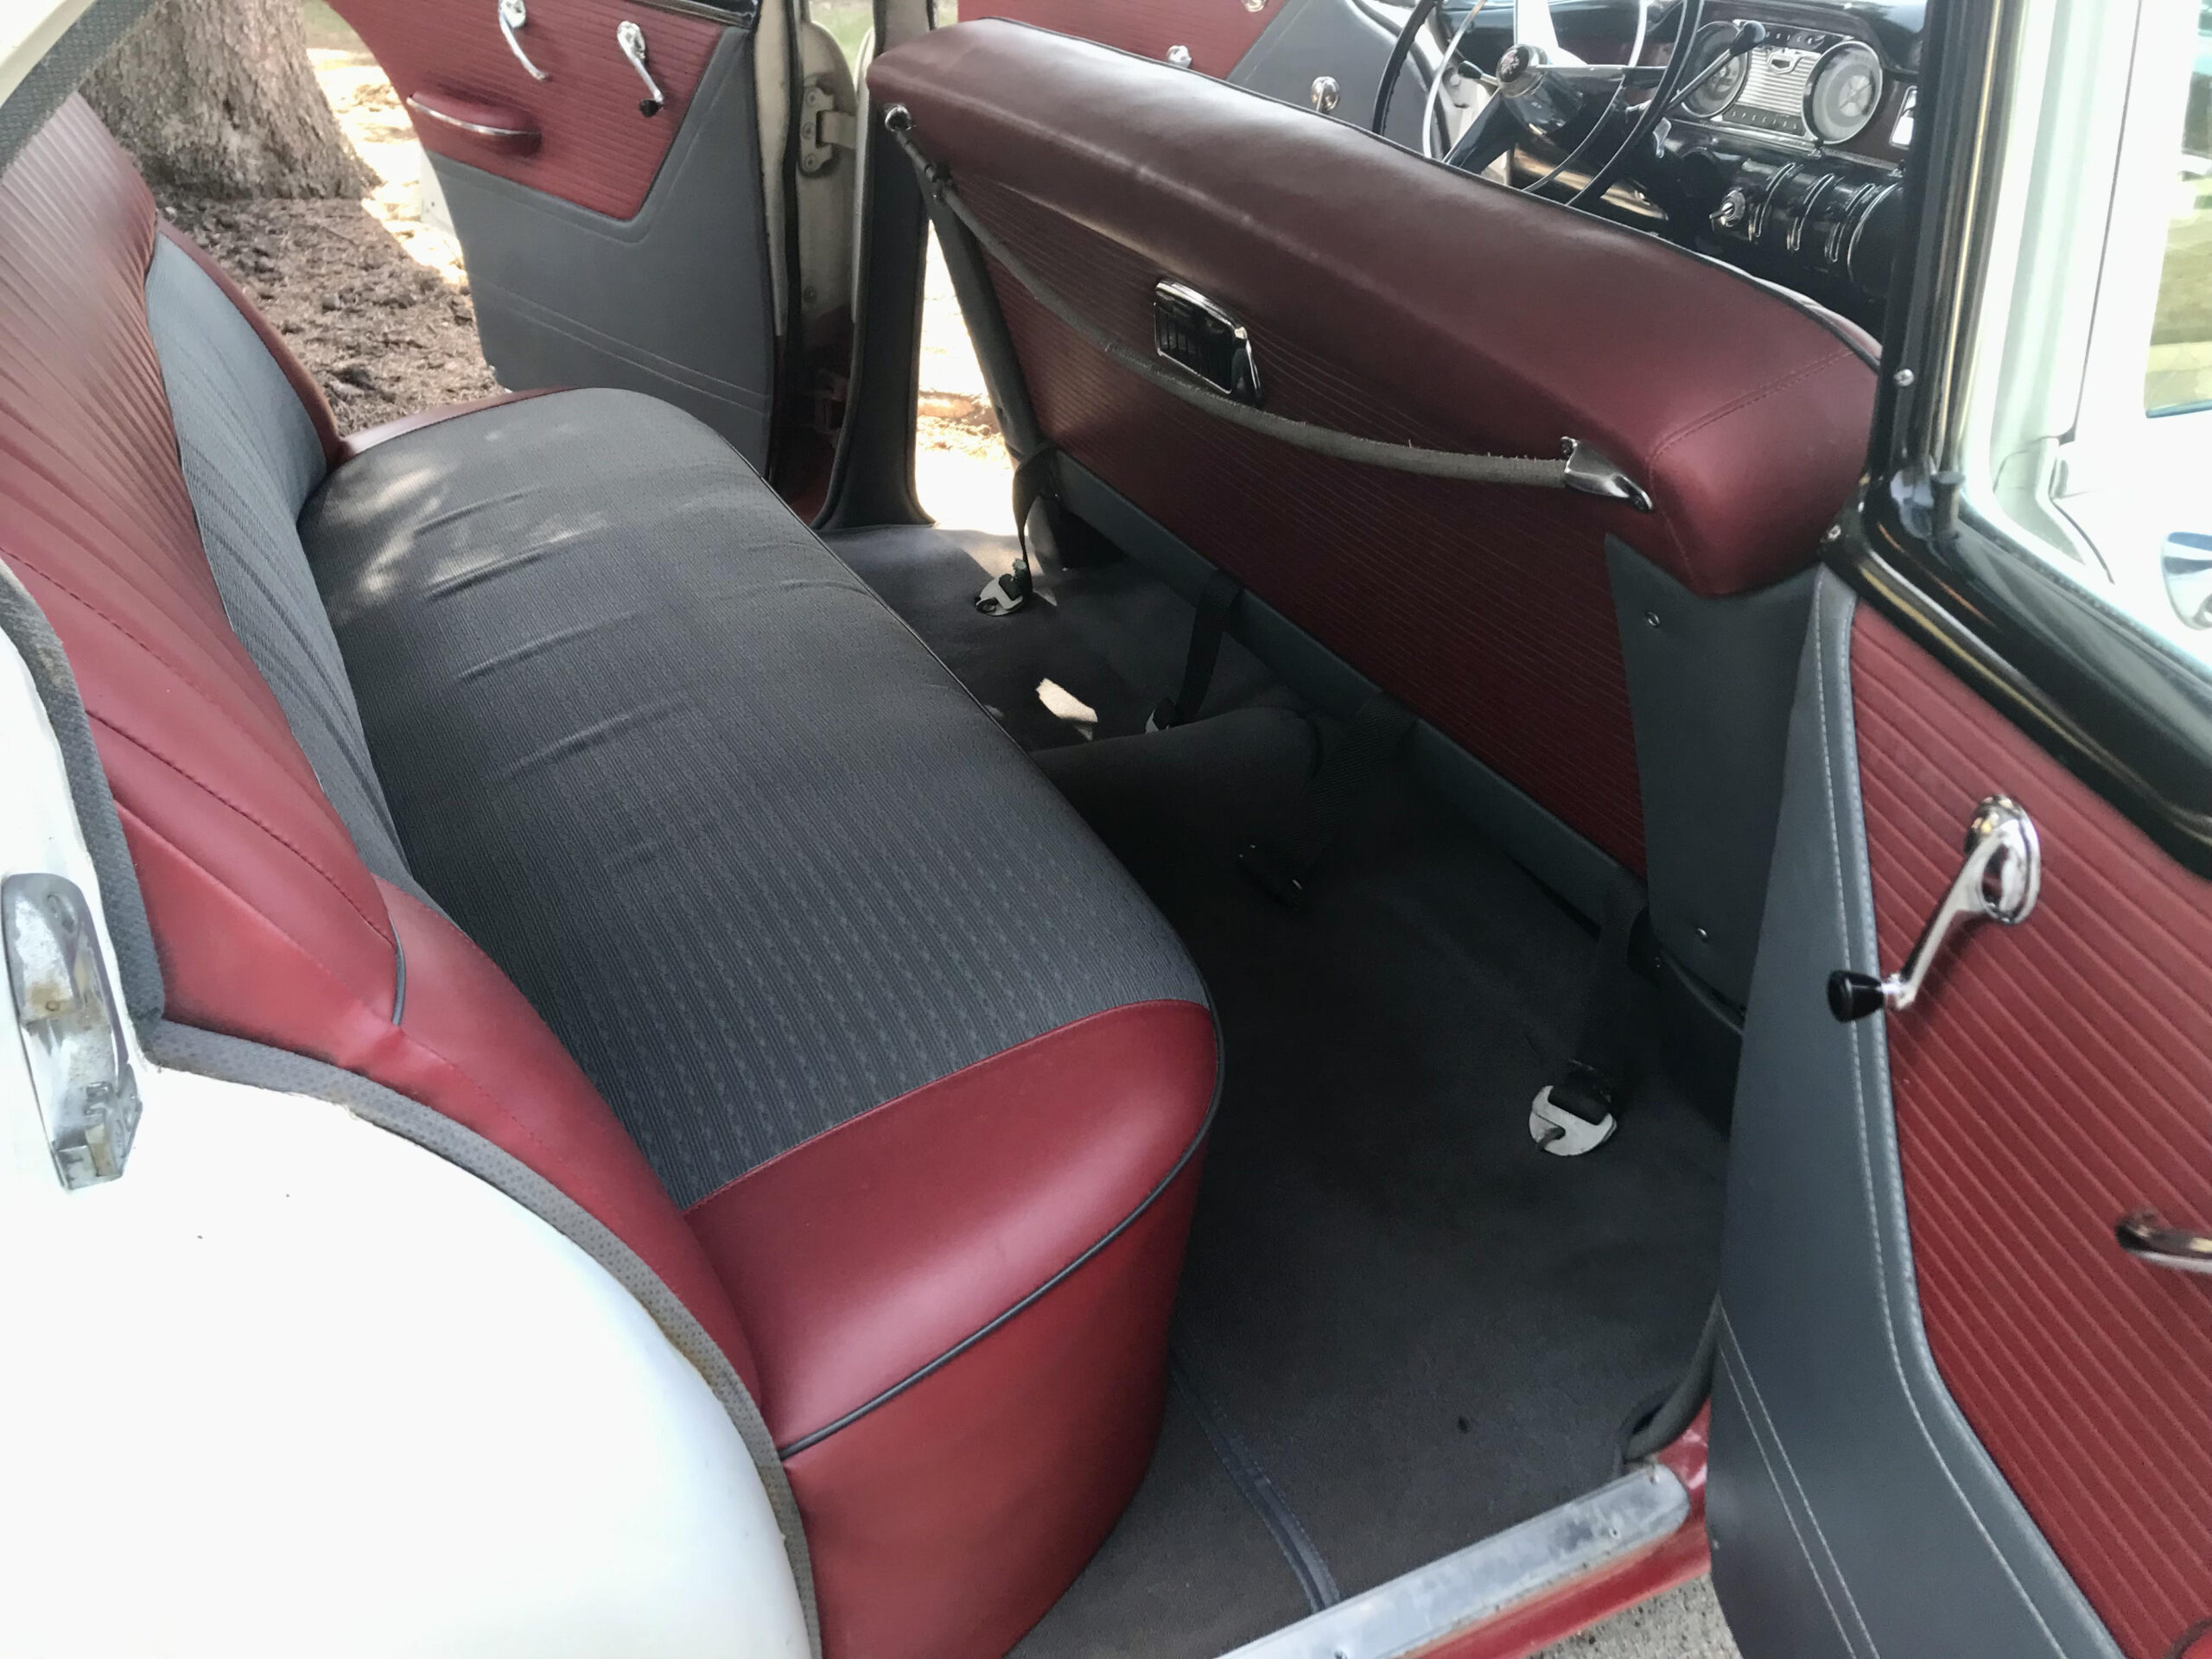 20230502-55-B-back-seat-interior1